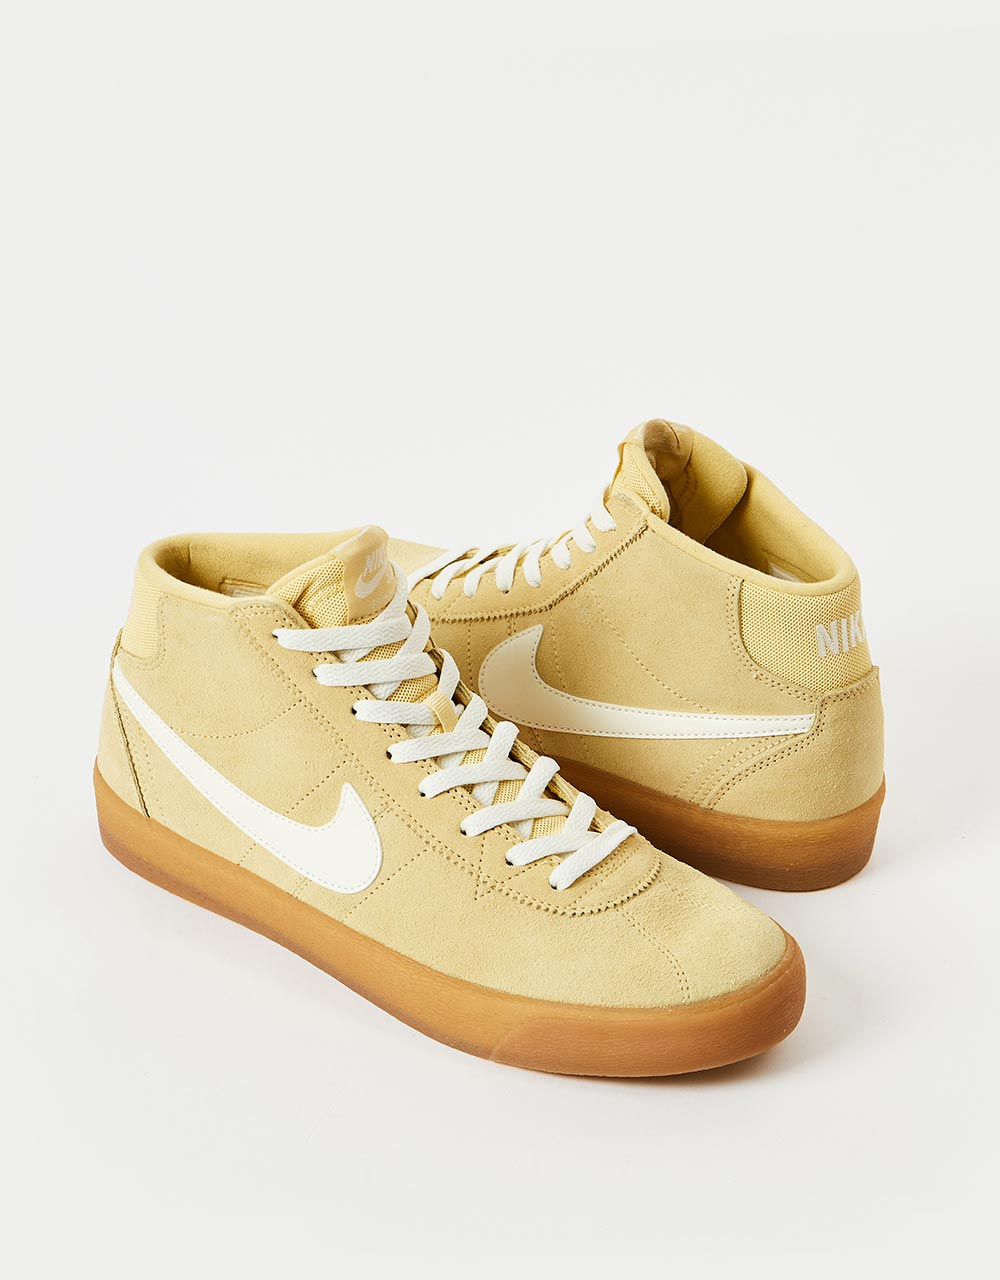 Nike SB Bruin High Skate Shoes - Lemon Wash/Sail-Lemon Wash – Route One